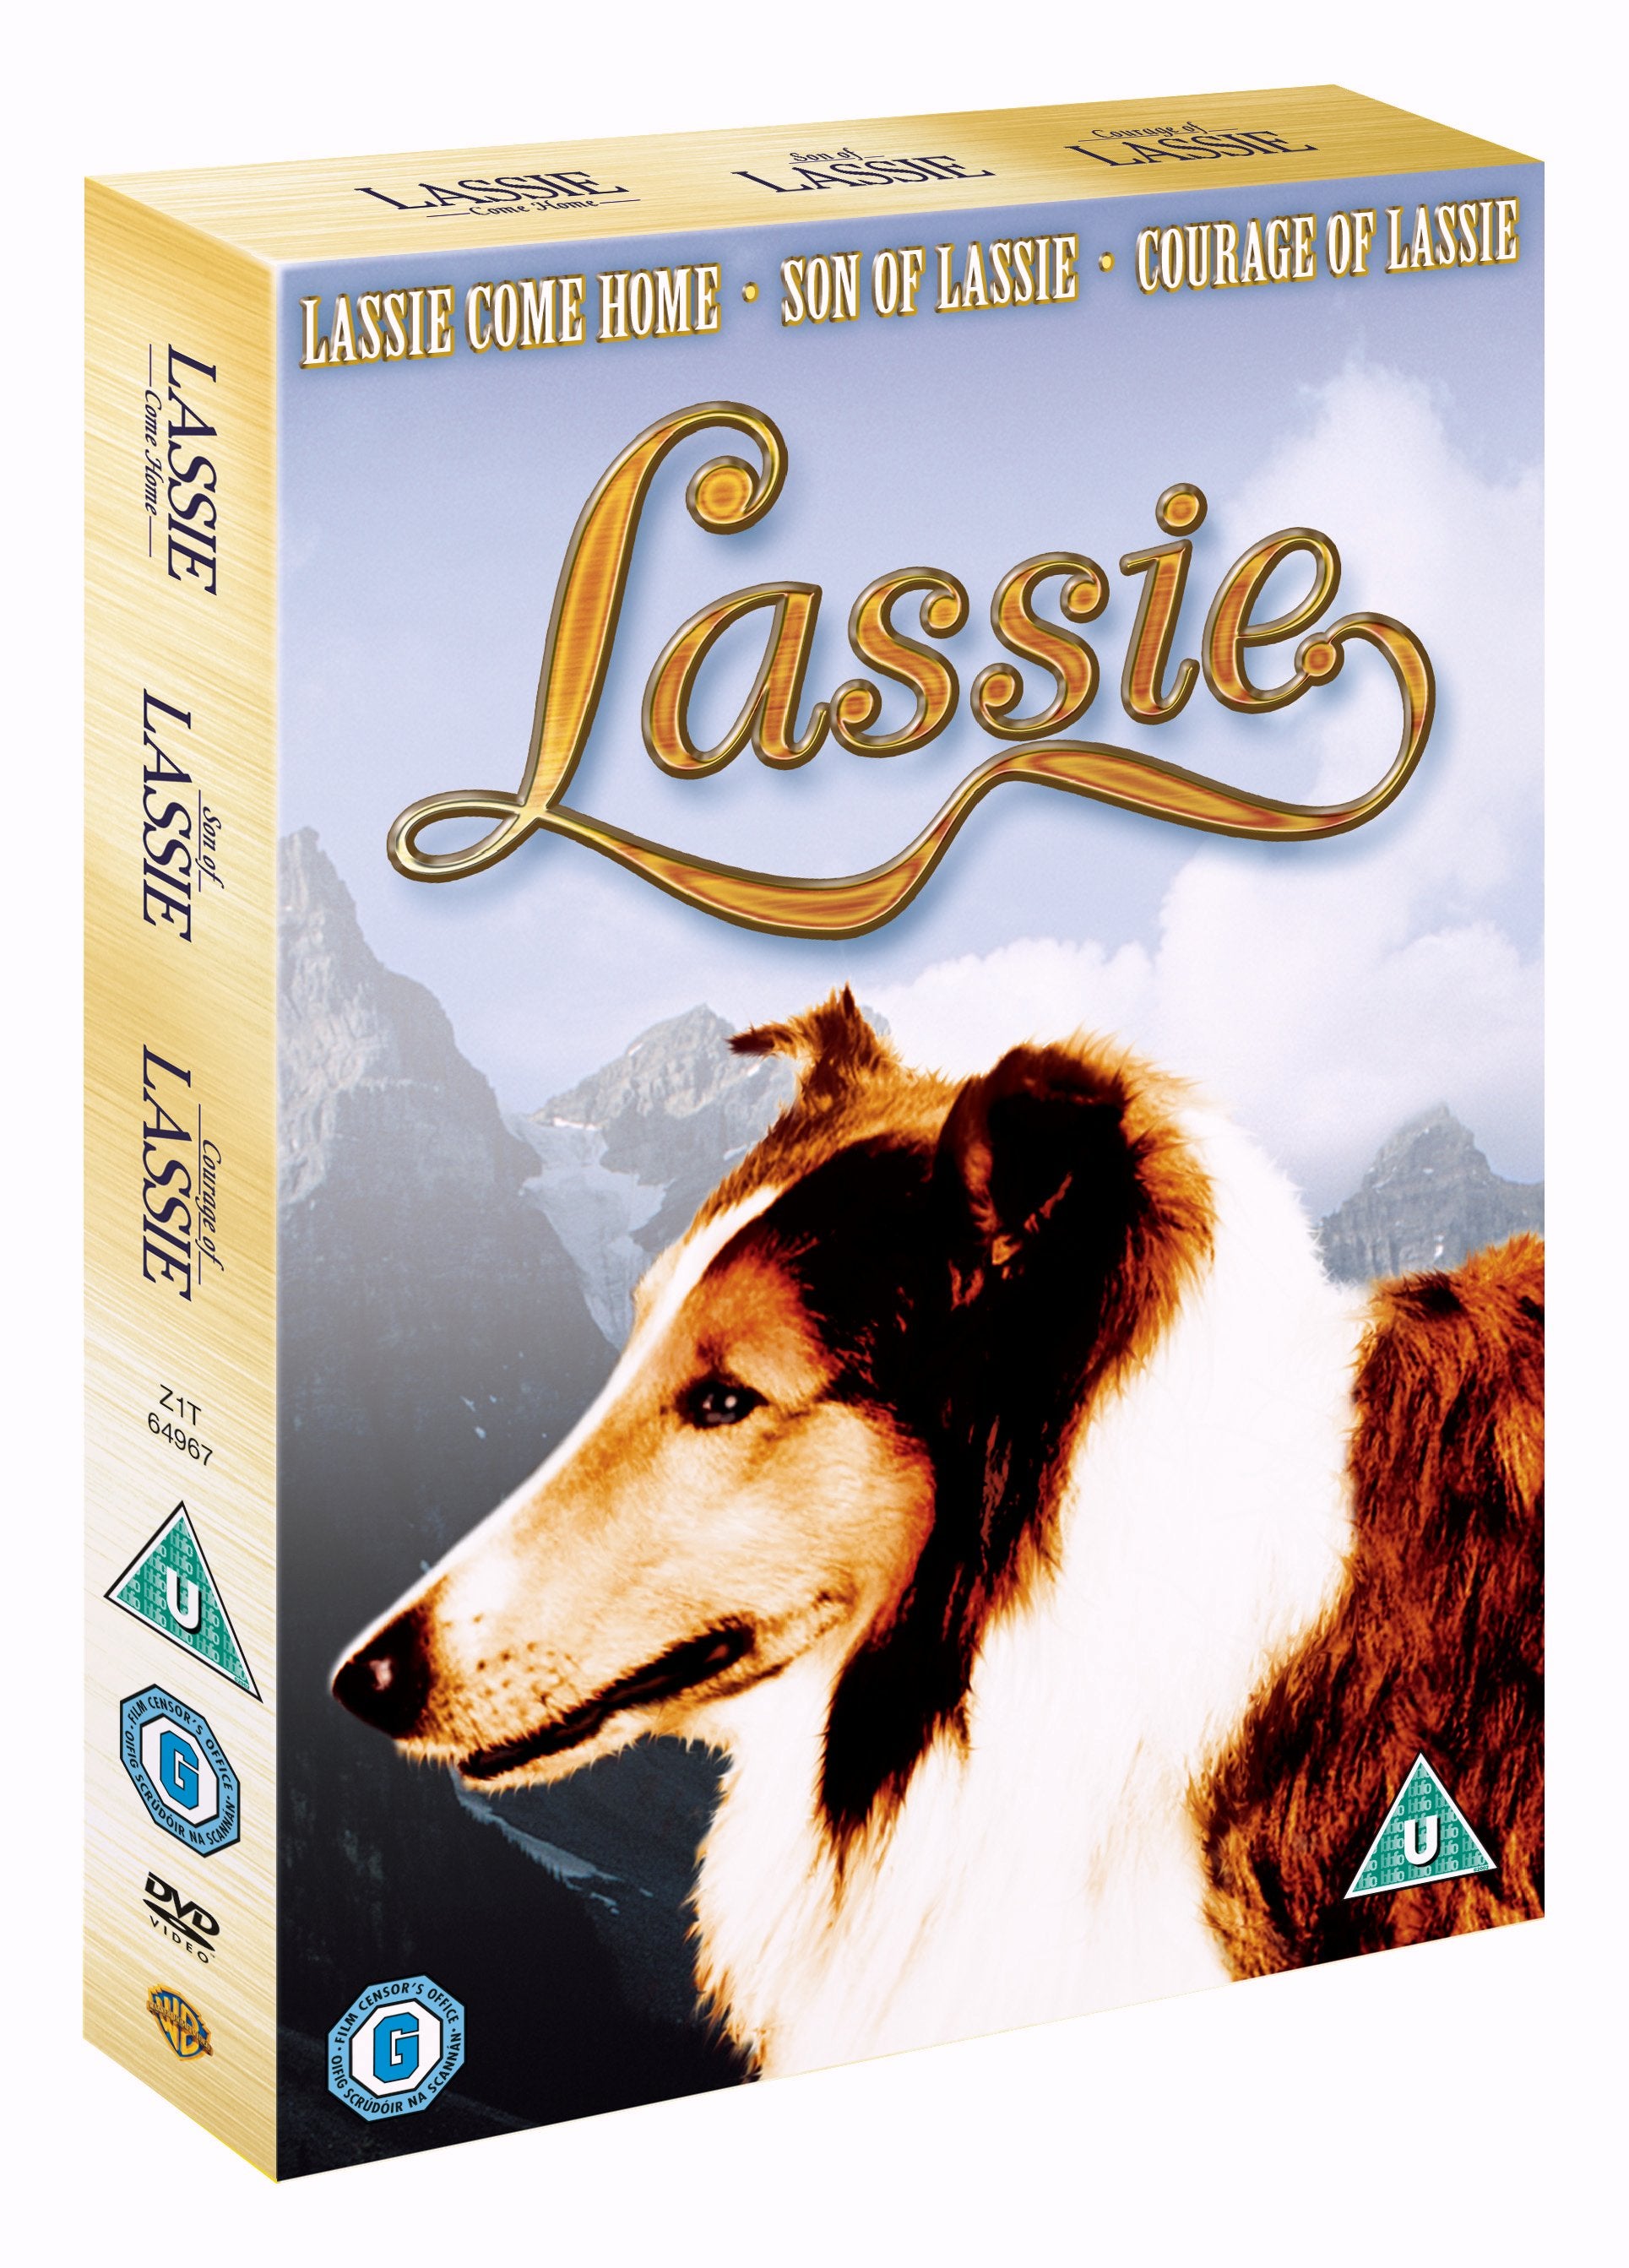 3 LASSIE Films LASSIE COME HOME SON of LASSIE Elizabeth Taylor